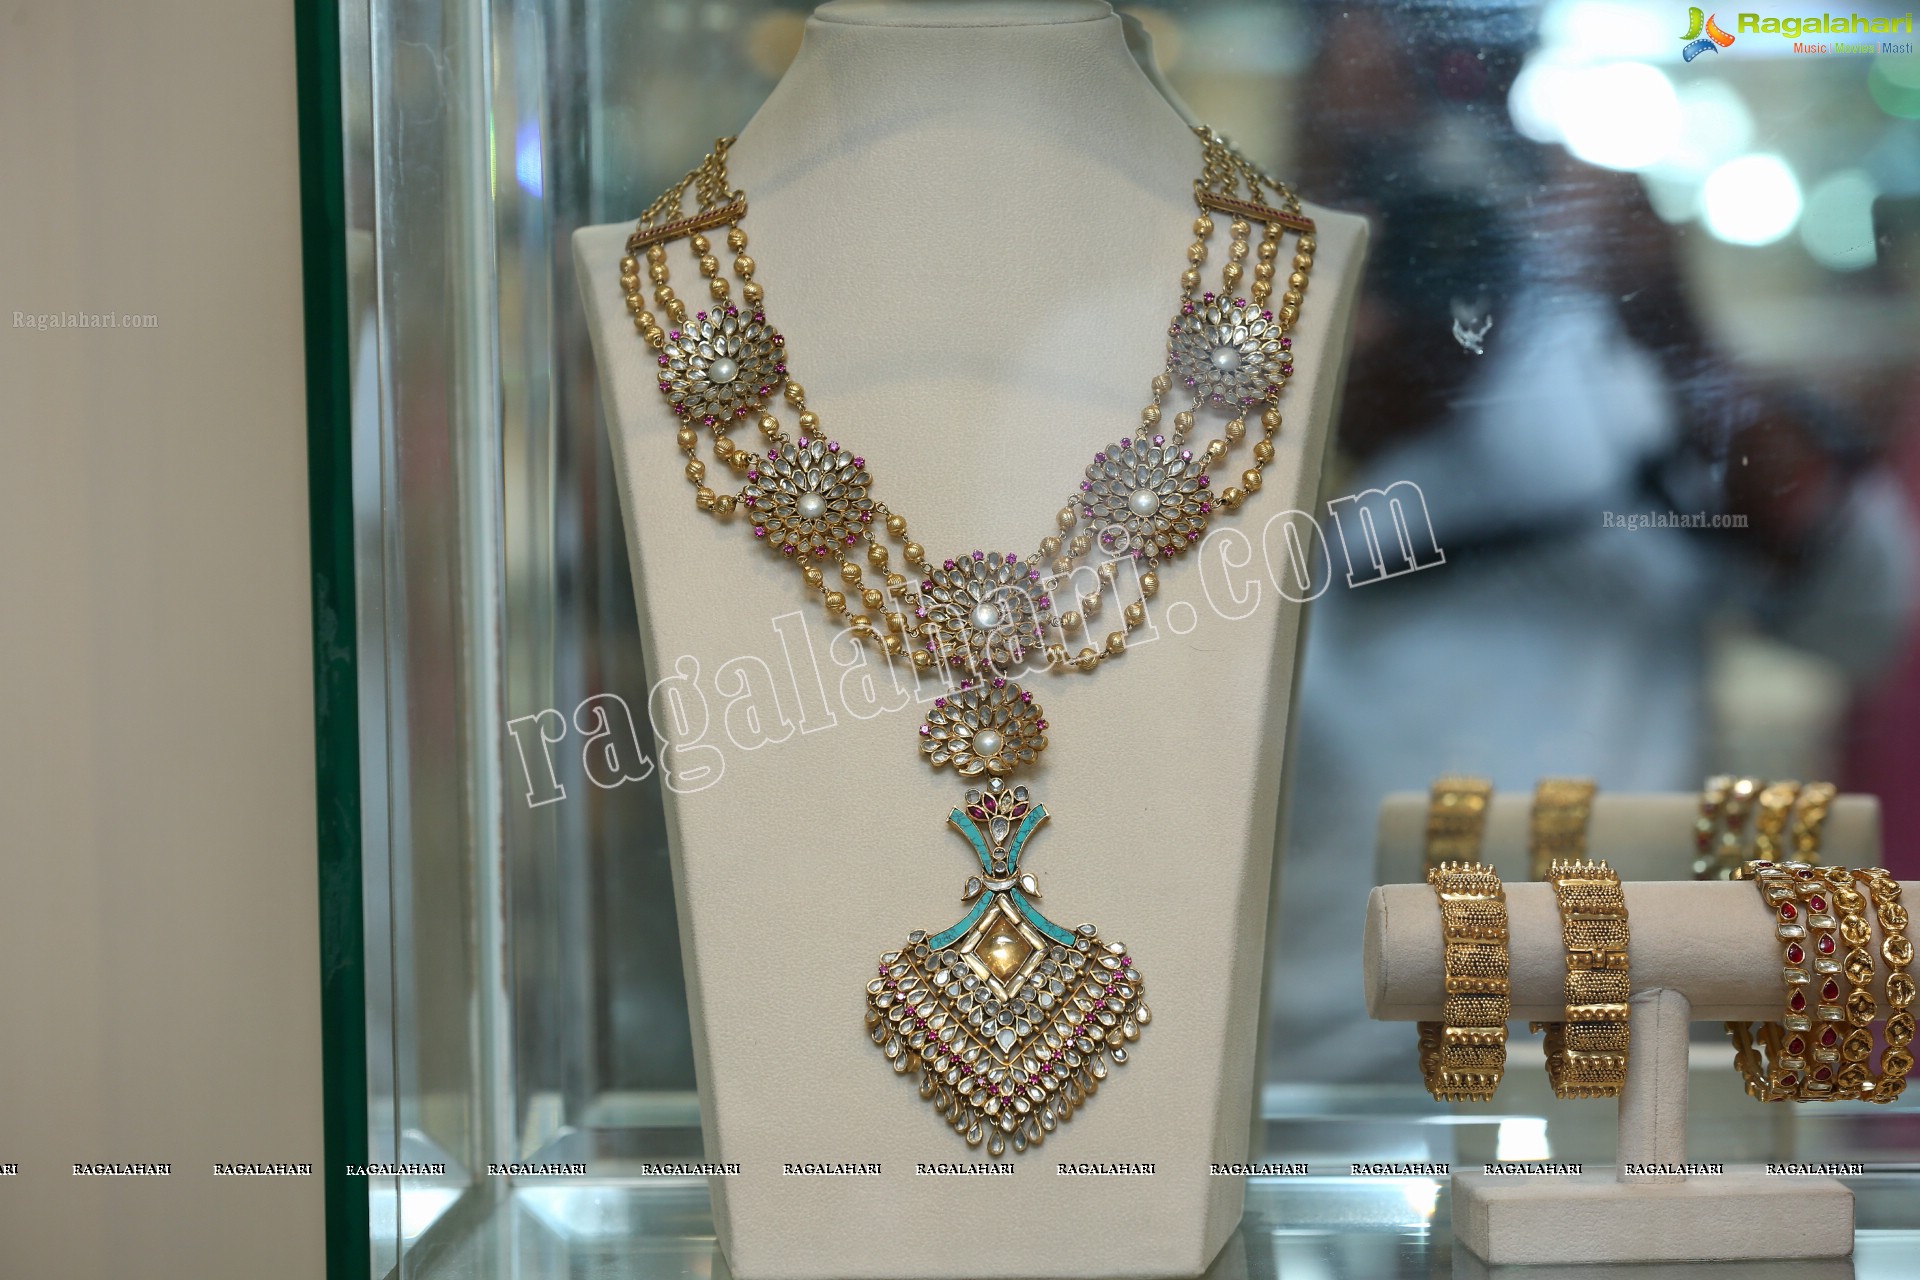 Amrapali's Sye Raa Jewellery Collection Showcase